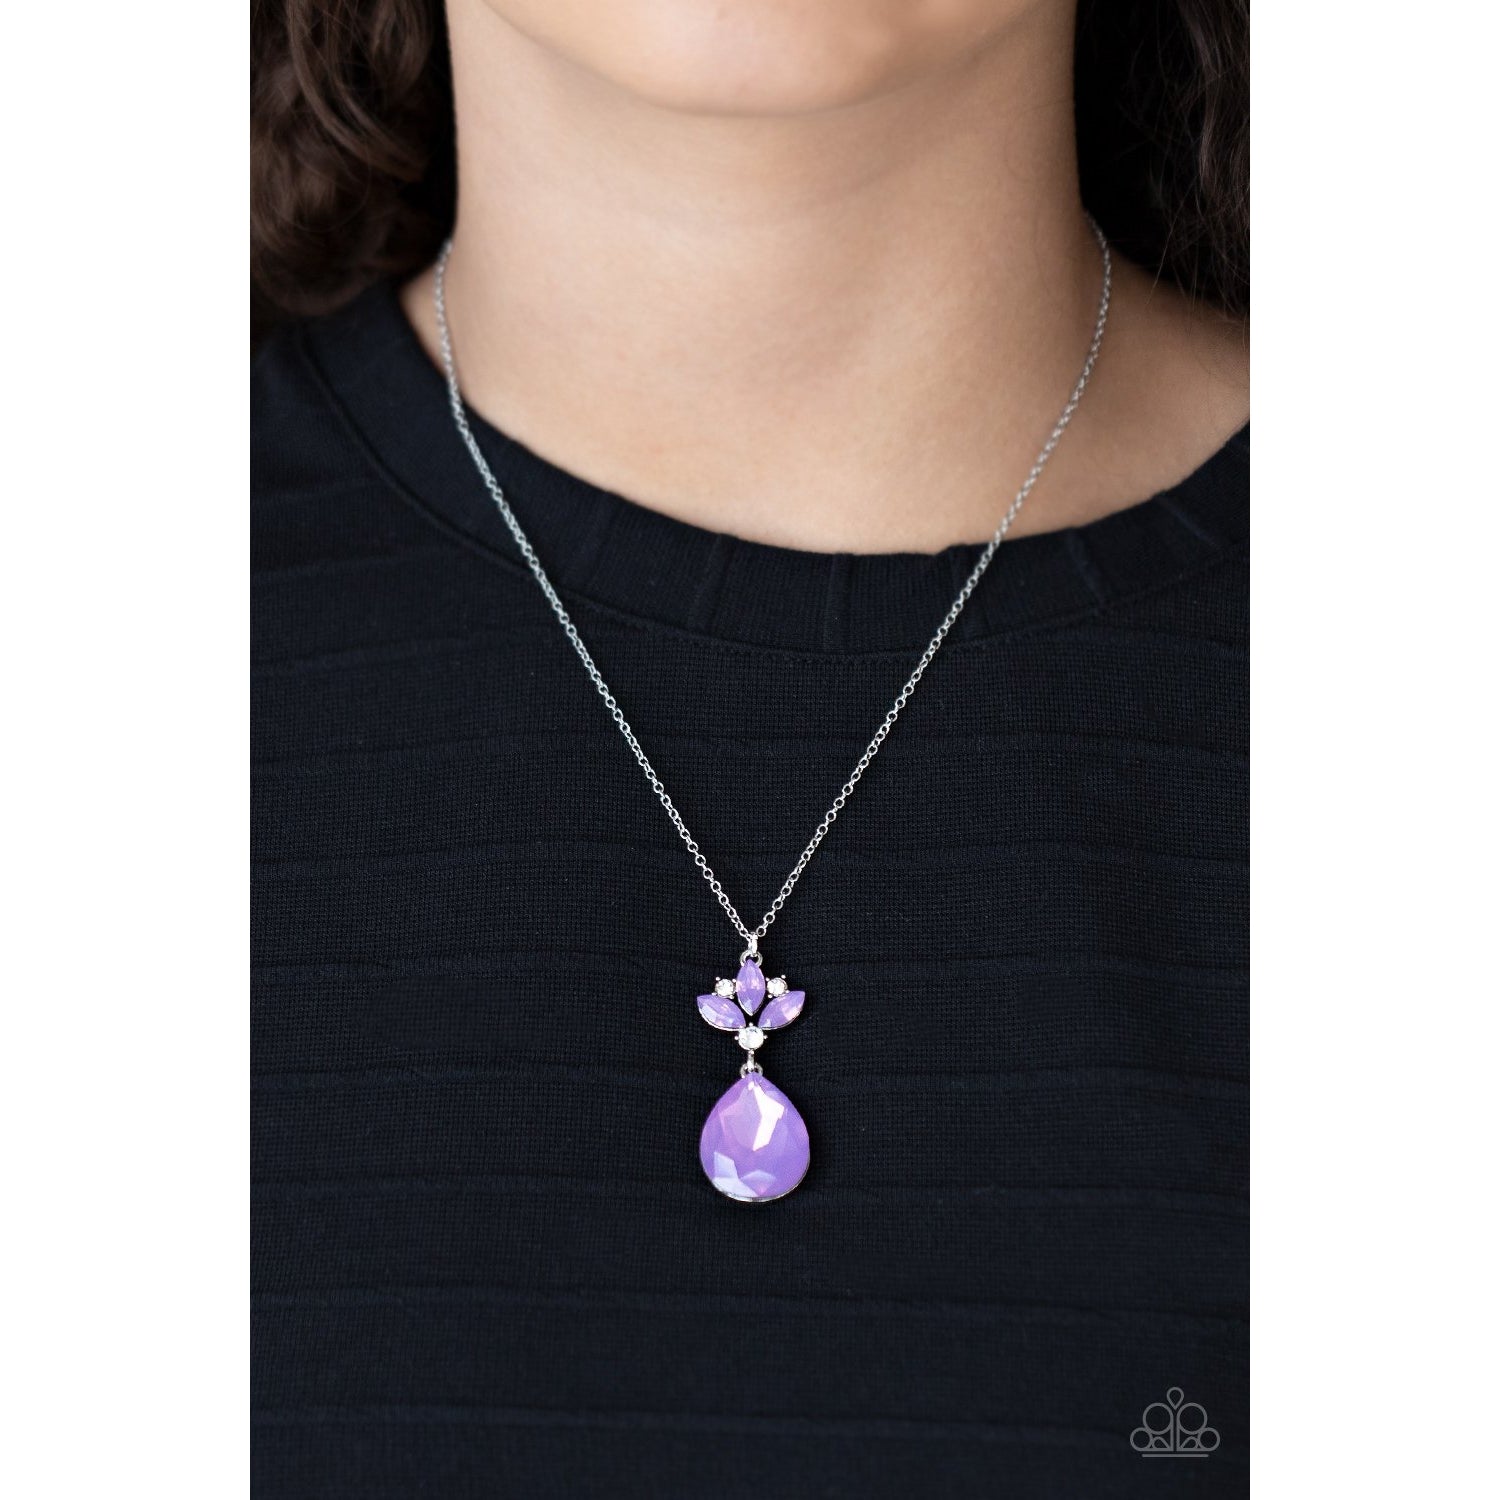 Celestial Shimmer - Purple Necklace - Paparazzi Accessories - GlaMarous Titi Jewels